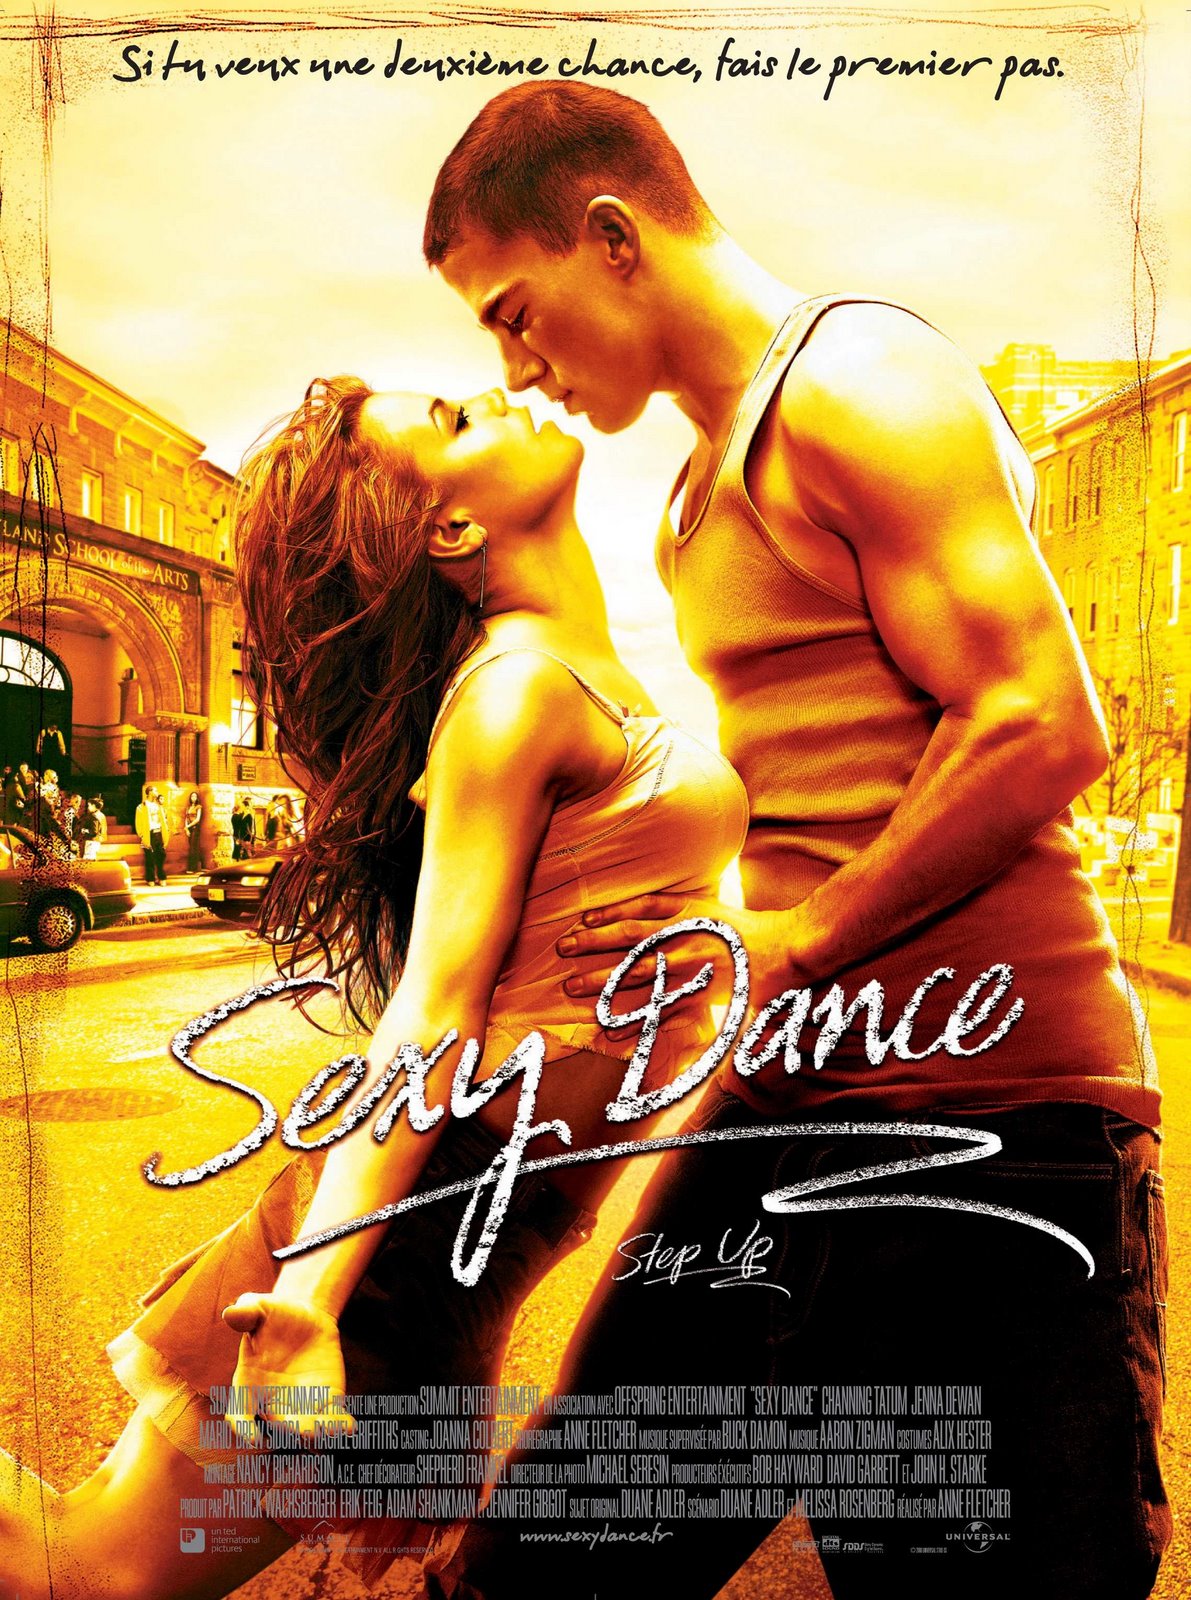 [Channing-Tatum-Jenna-Dewan-Step-Up-Sexy-Dance-France-HQ-Poster.jpg]